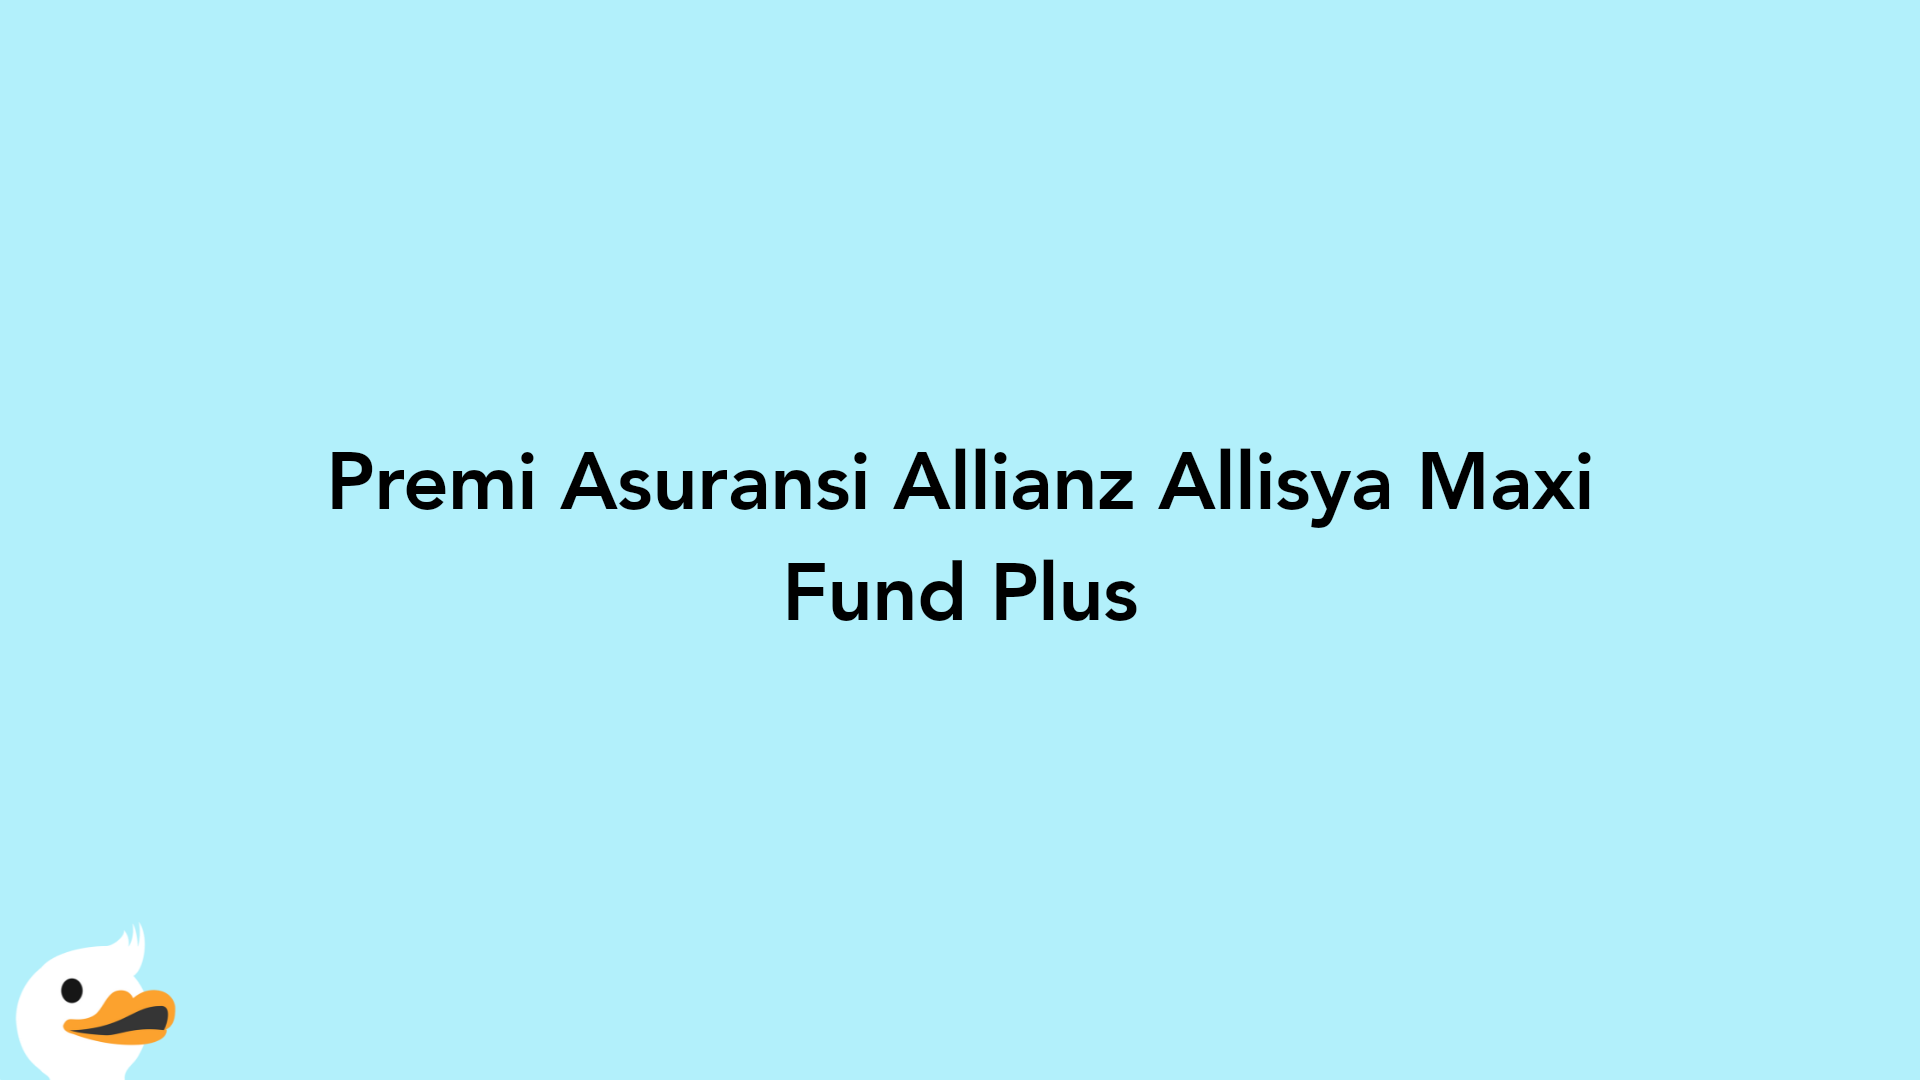 Premi Asuransi Allianz Allisya Maxi Fund Plus